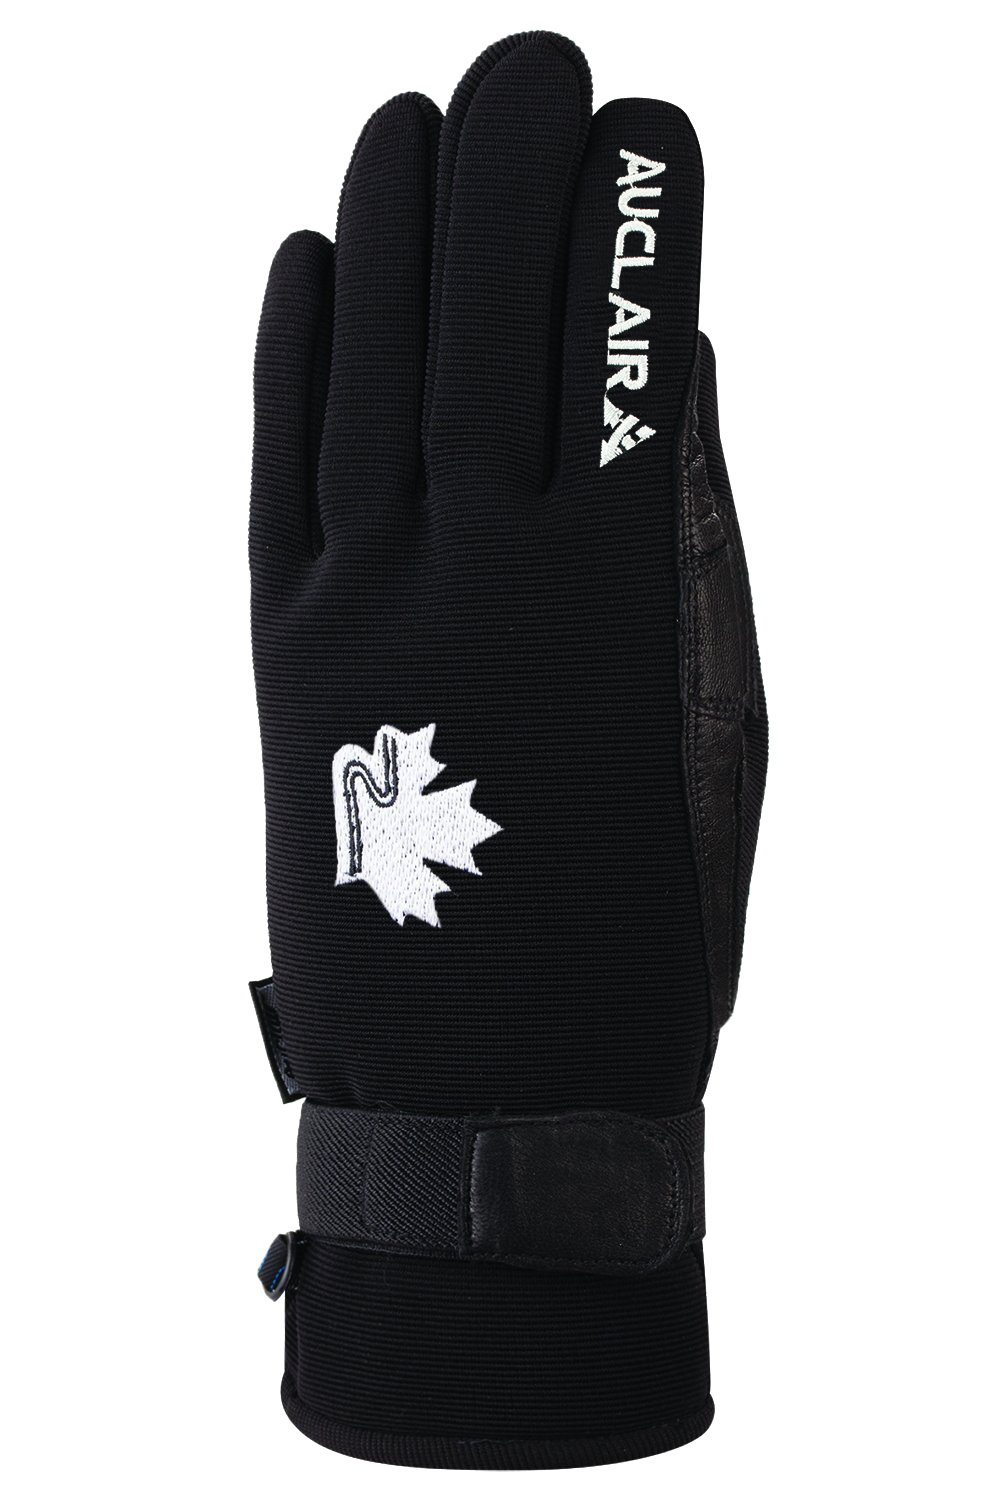 Skater Gloves - Women-Glove-Auclair-XL-BLACK/BLACK-Auclair Sports